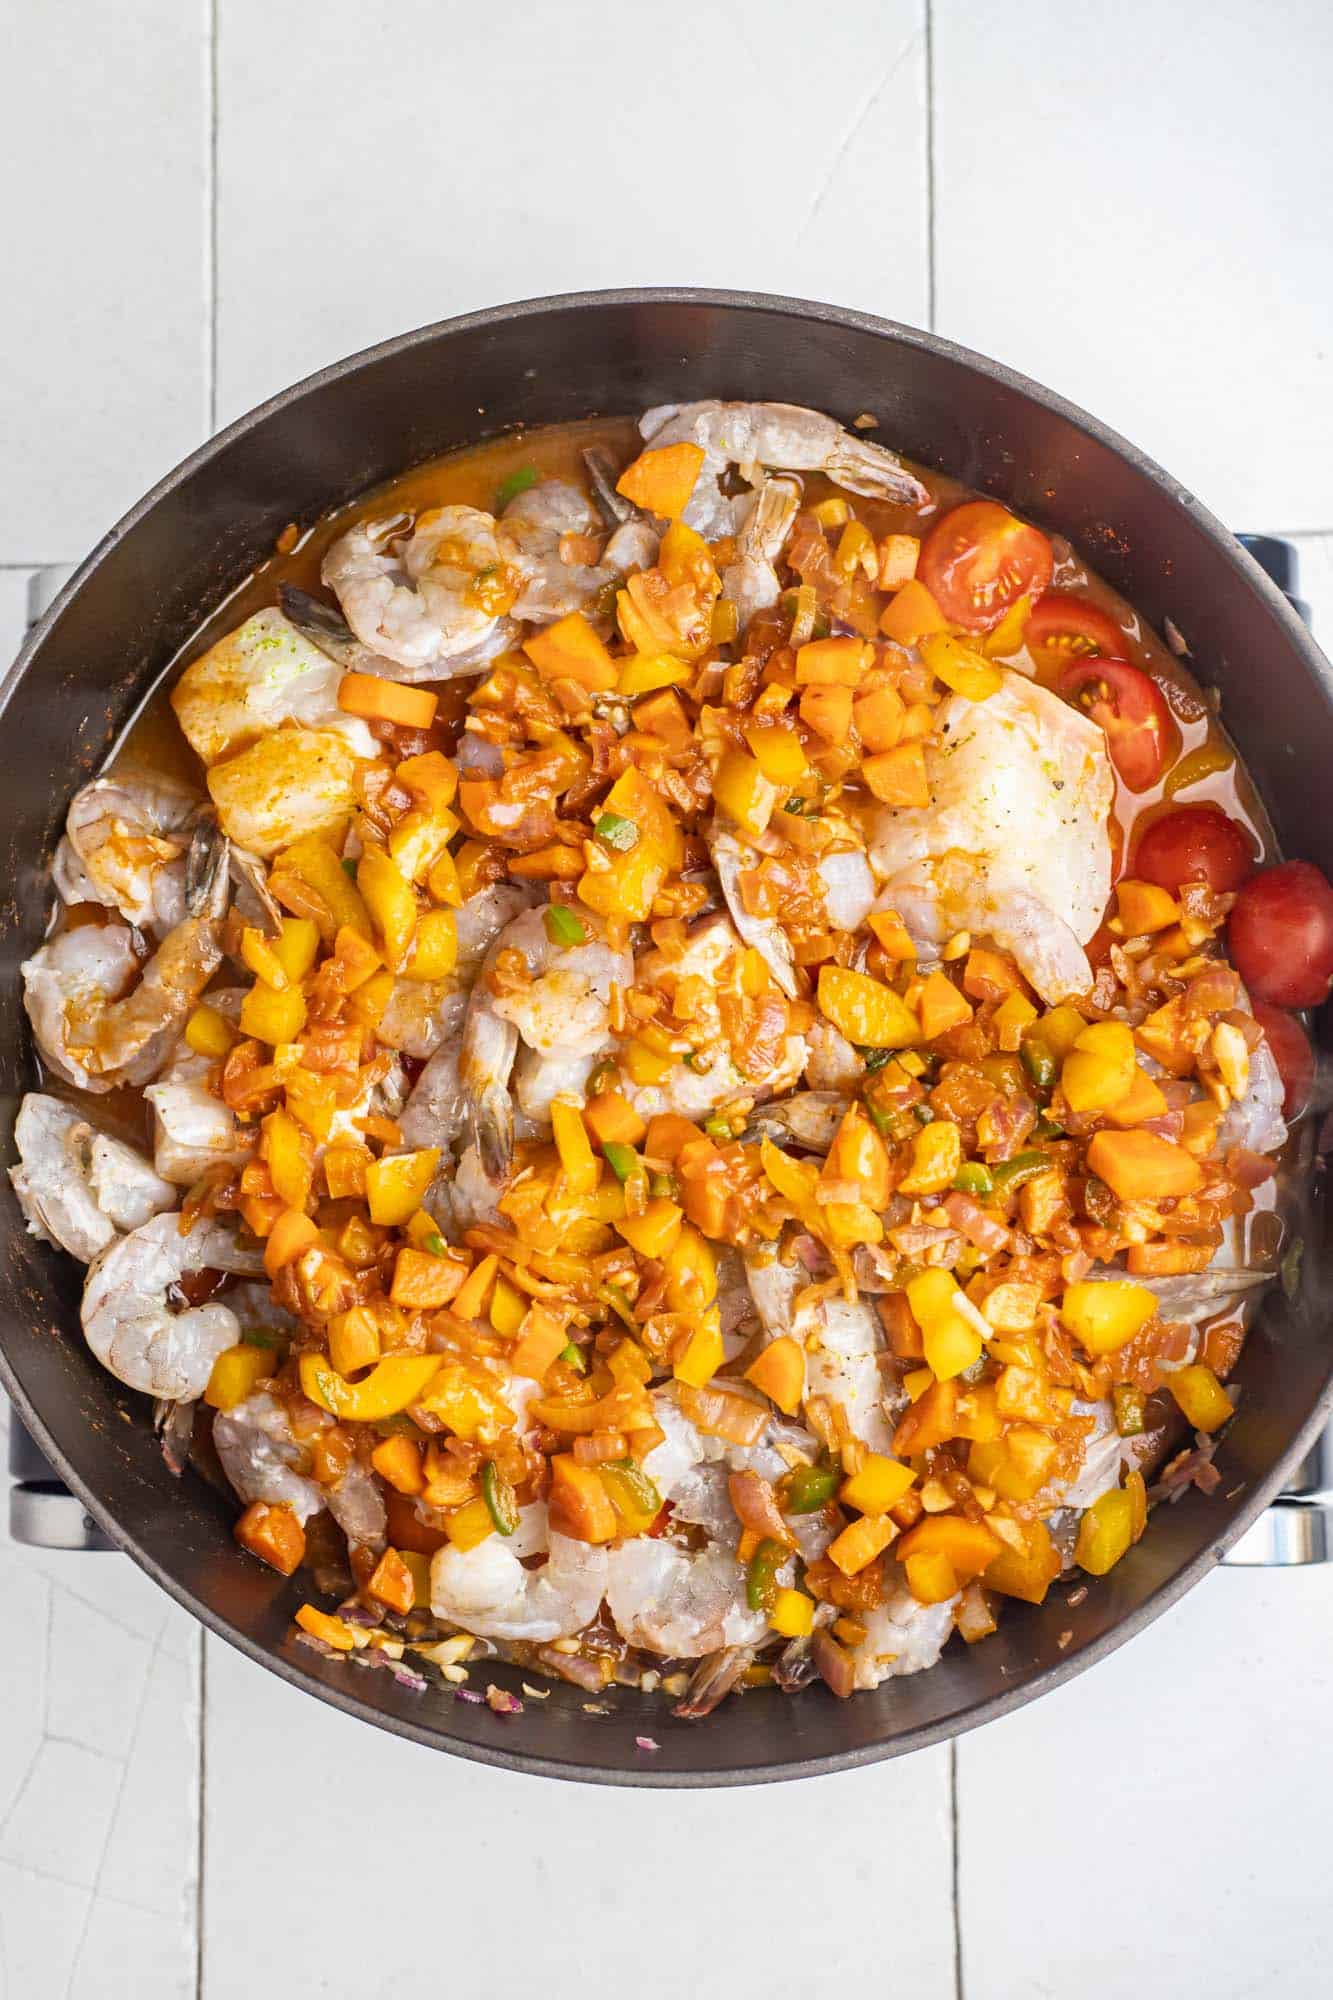 fish chunks and shrimp added to the pan to make Brazilian fish stew